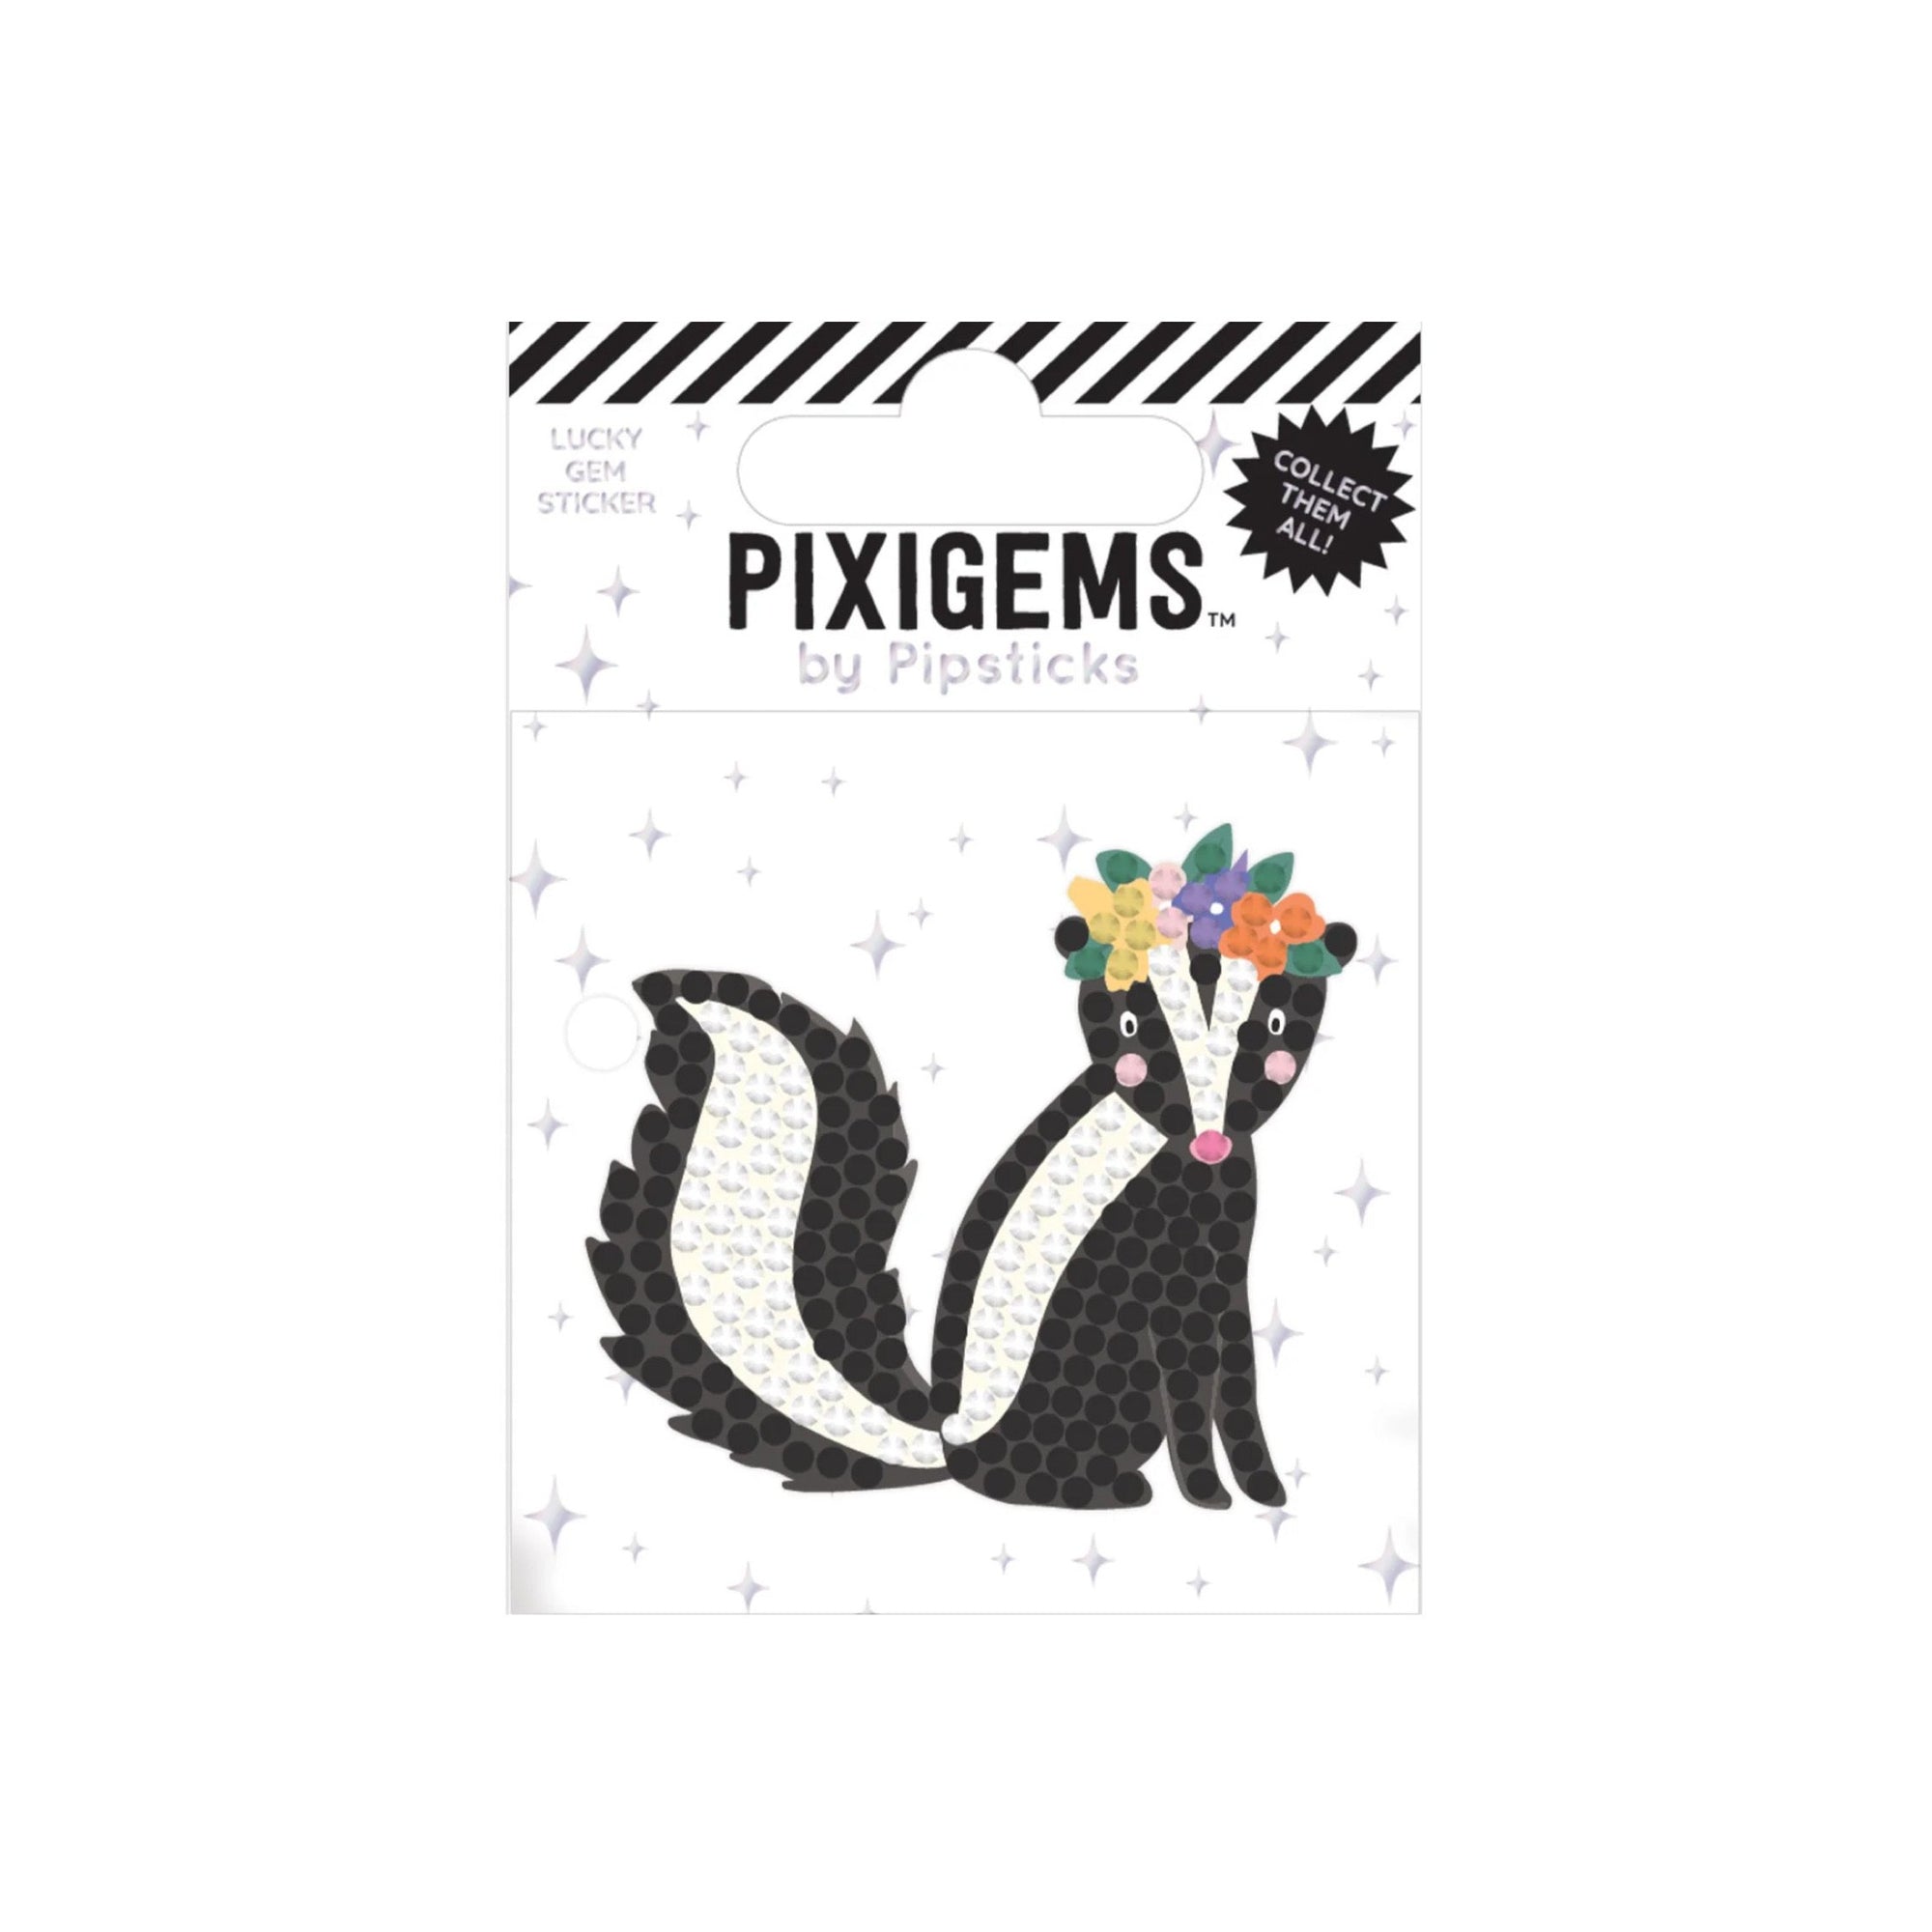 Pipsticks Pixigems Stickers